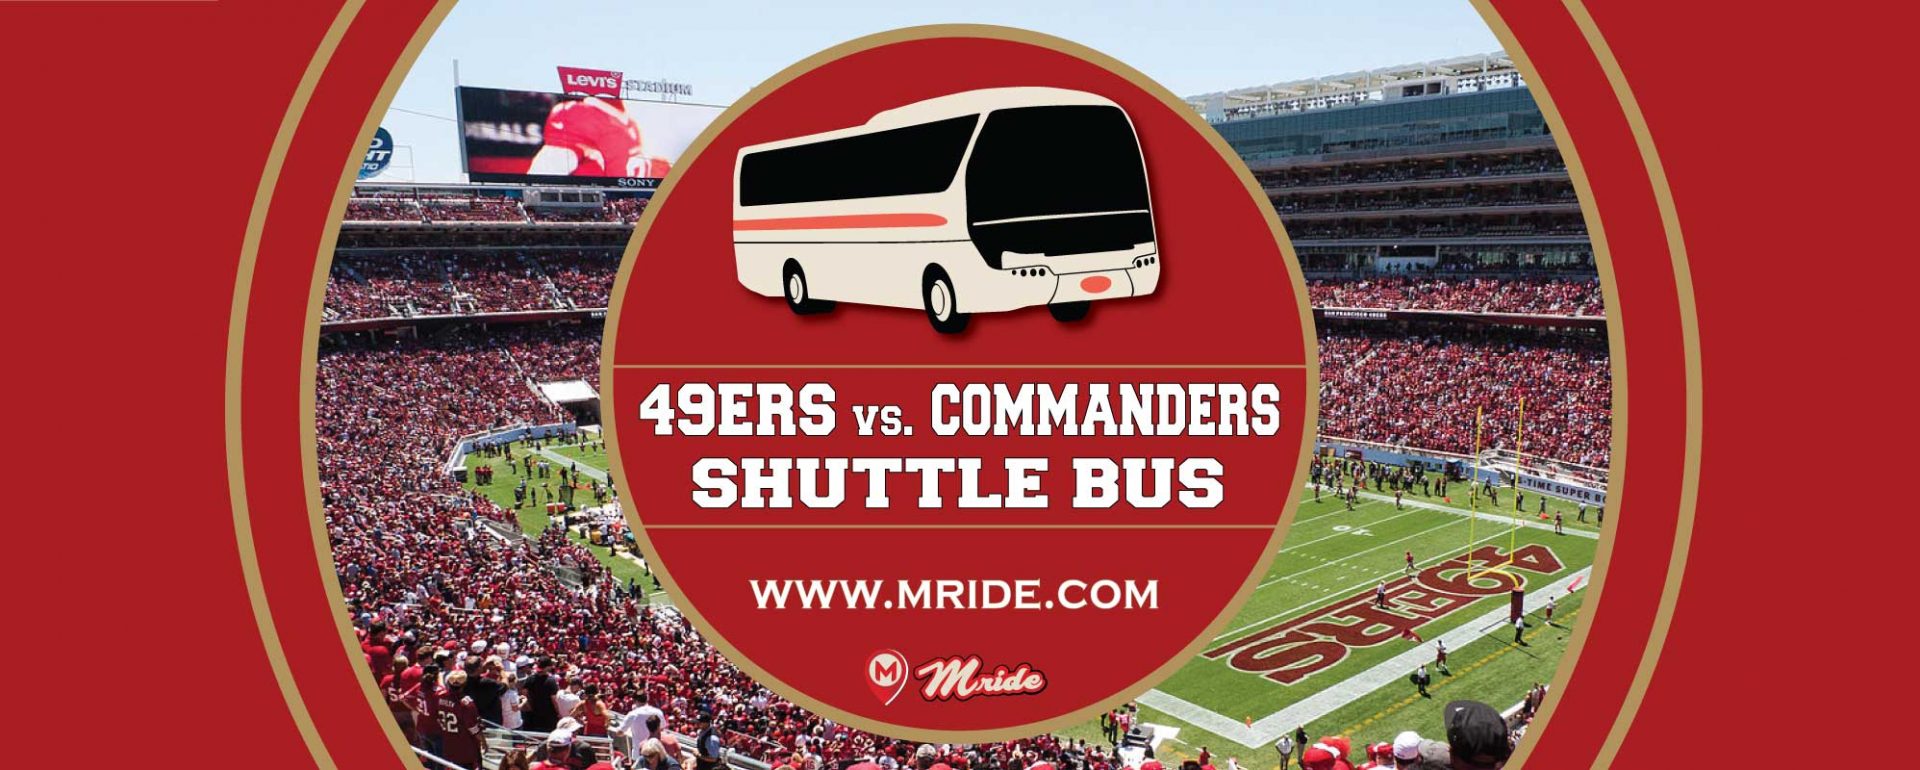 49ers vs. Commanders Shuttle Bus